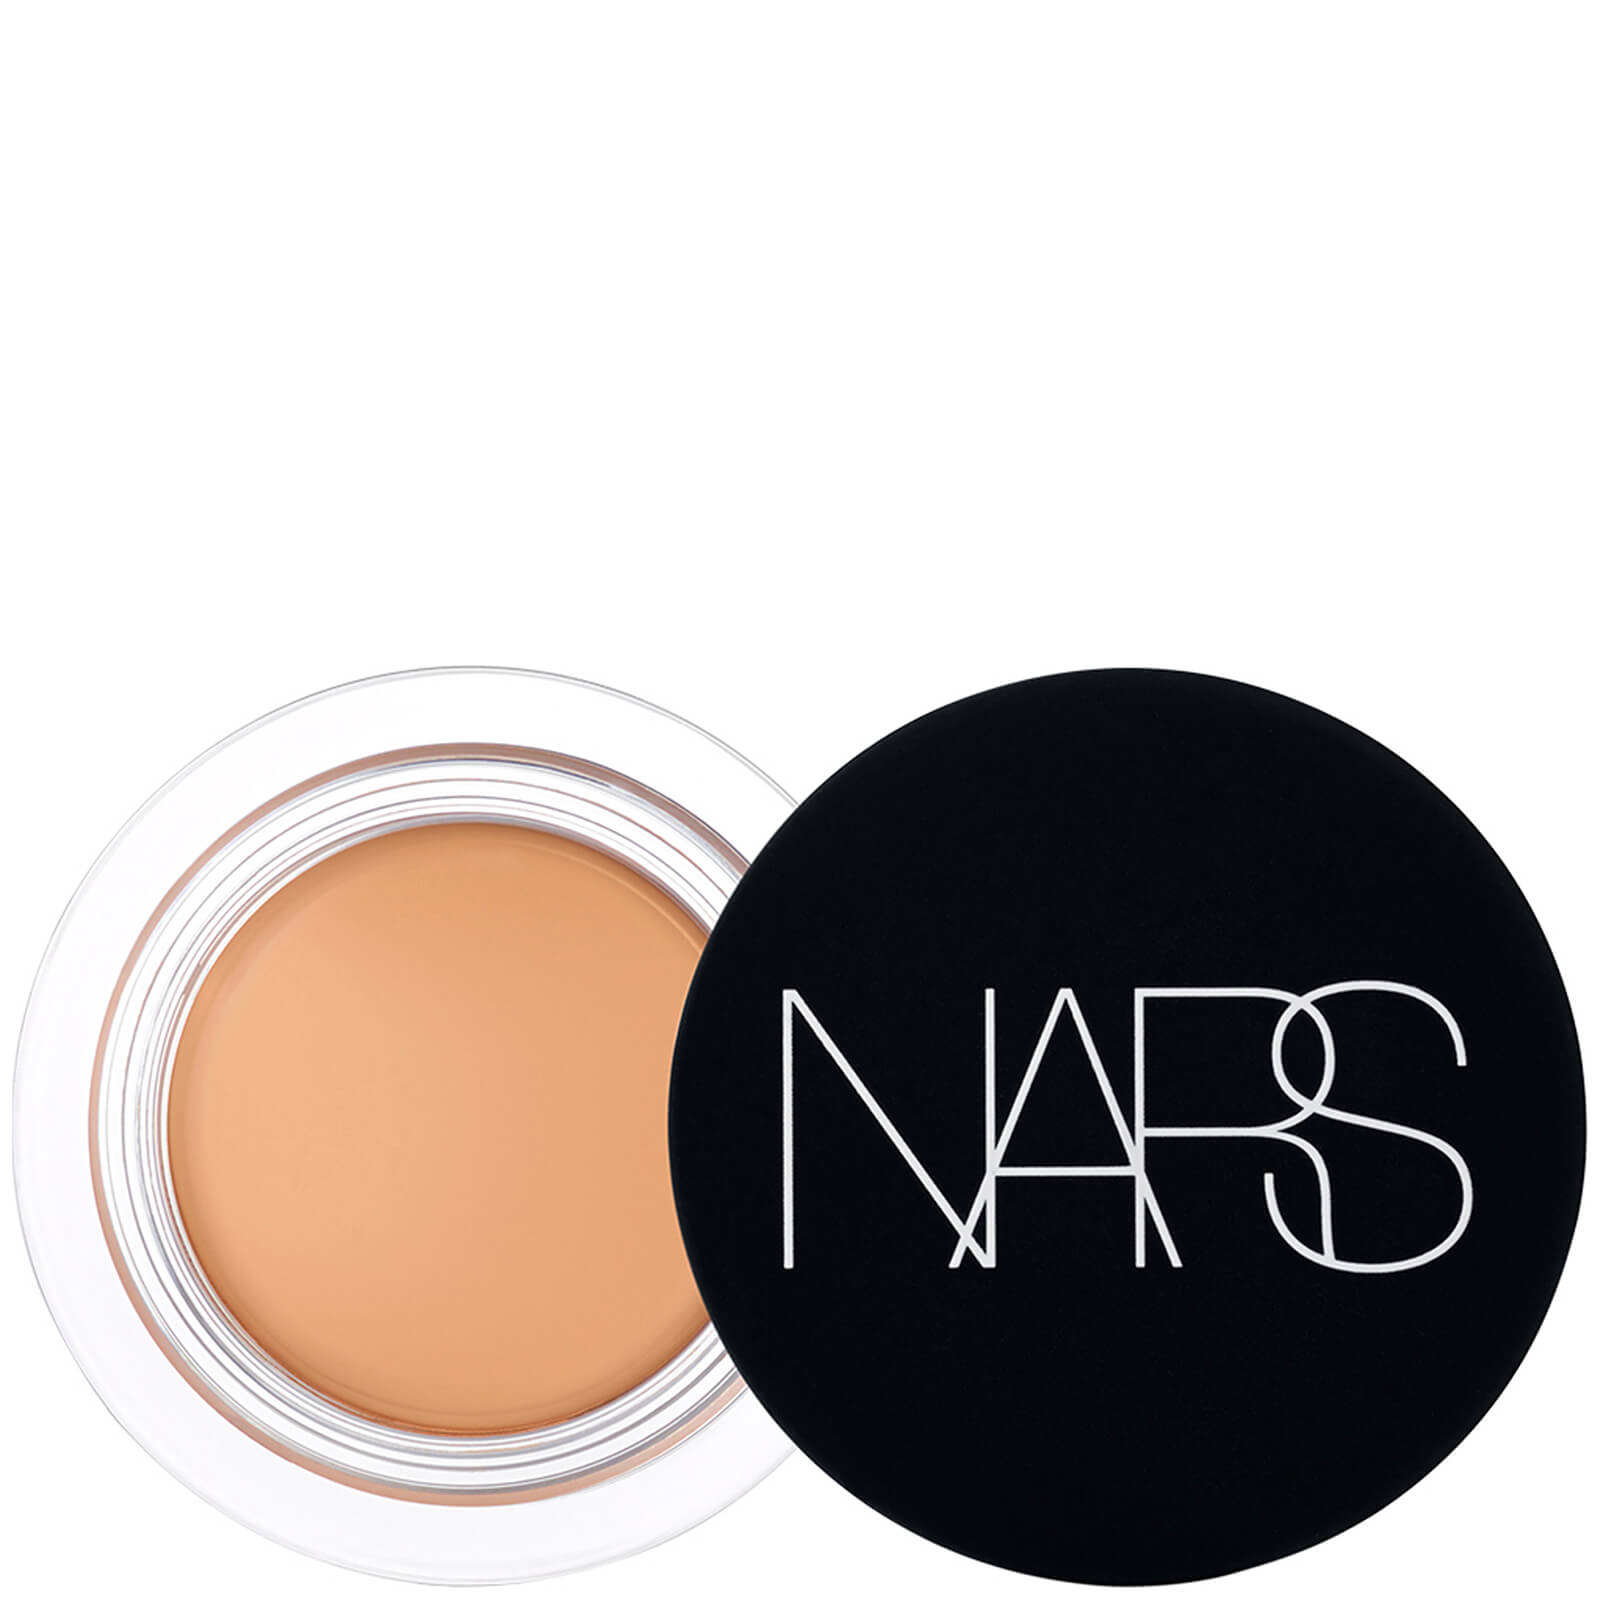 NARS Cosmetics Soft Matte Complete Concealer 5g (Various Shades) - Ginger